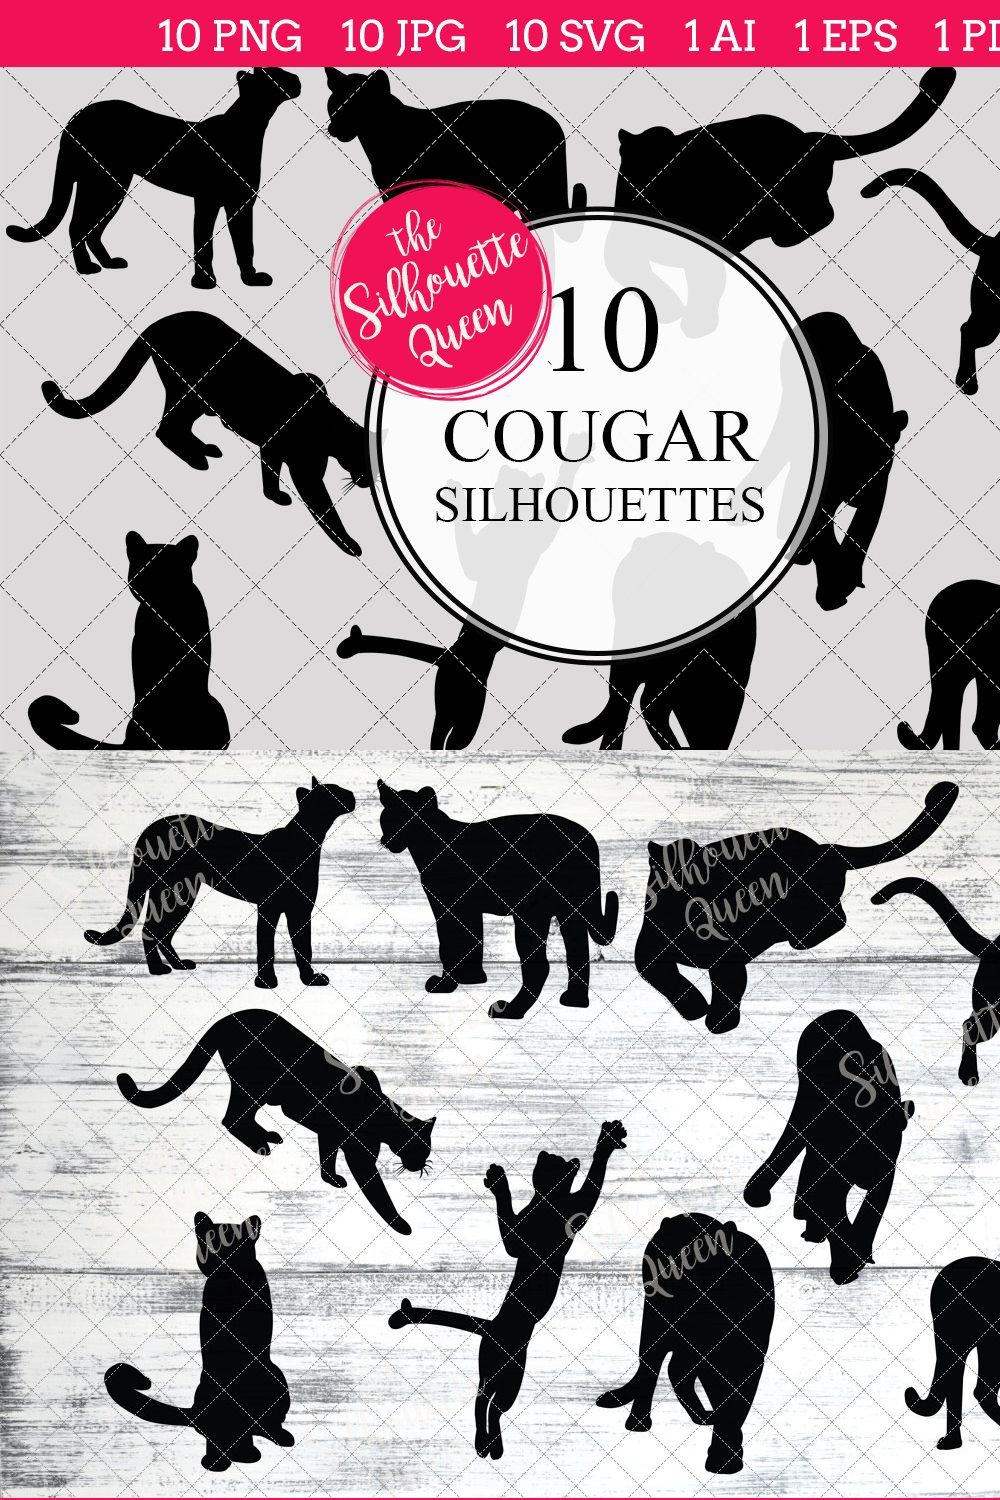 Cougar Silhouette Clipart Clip Art pinterest preview image.